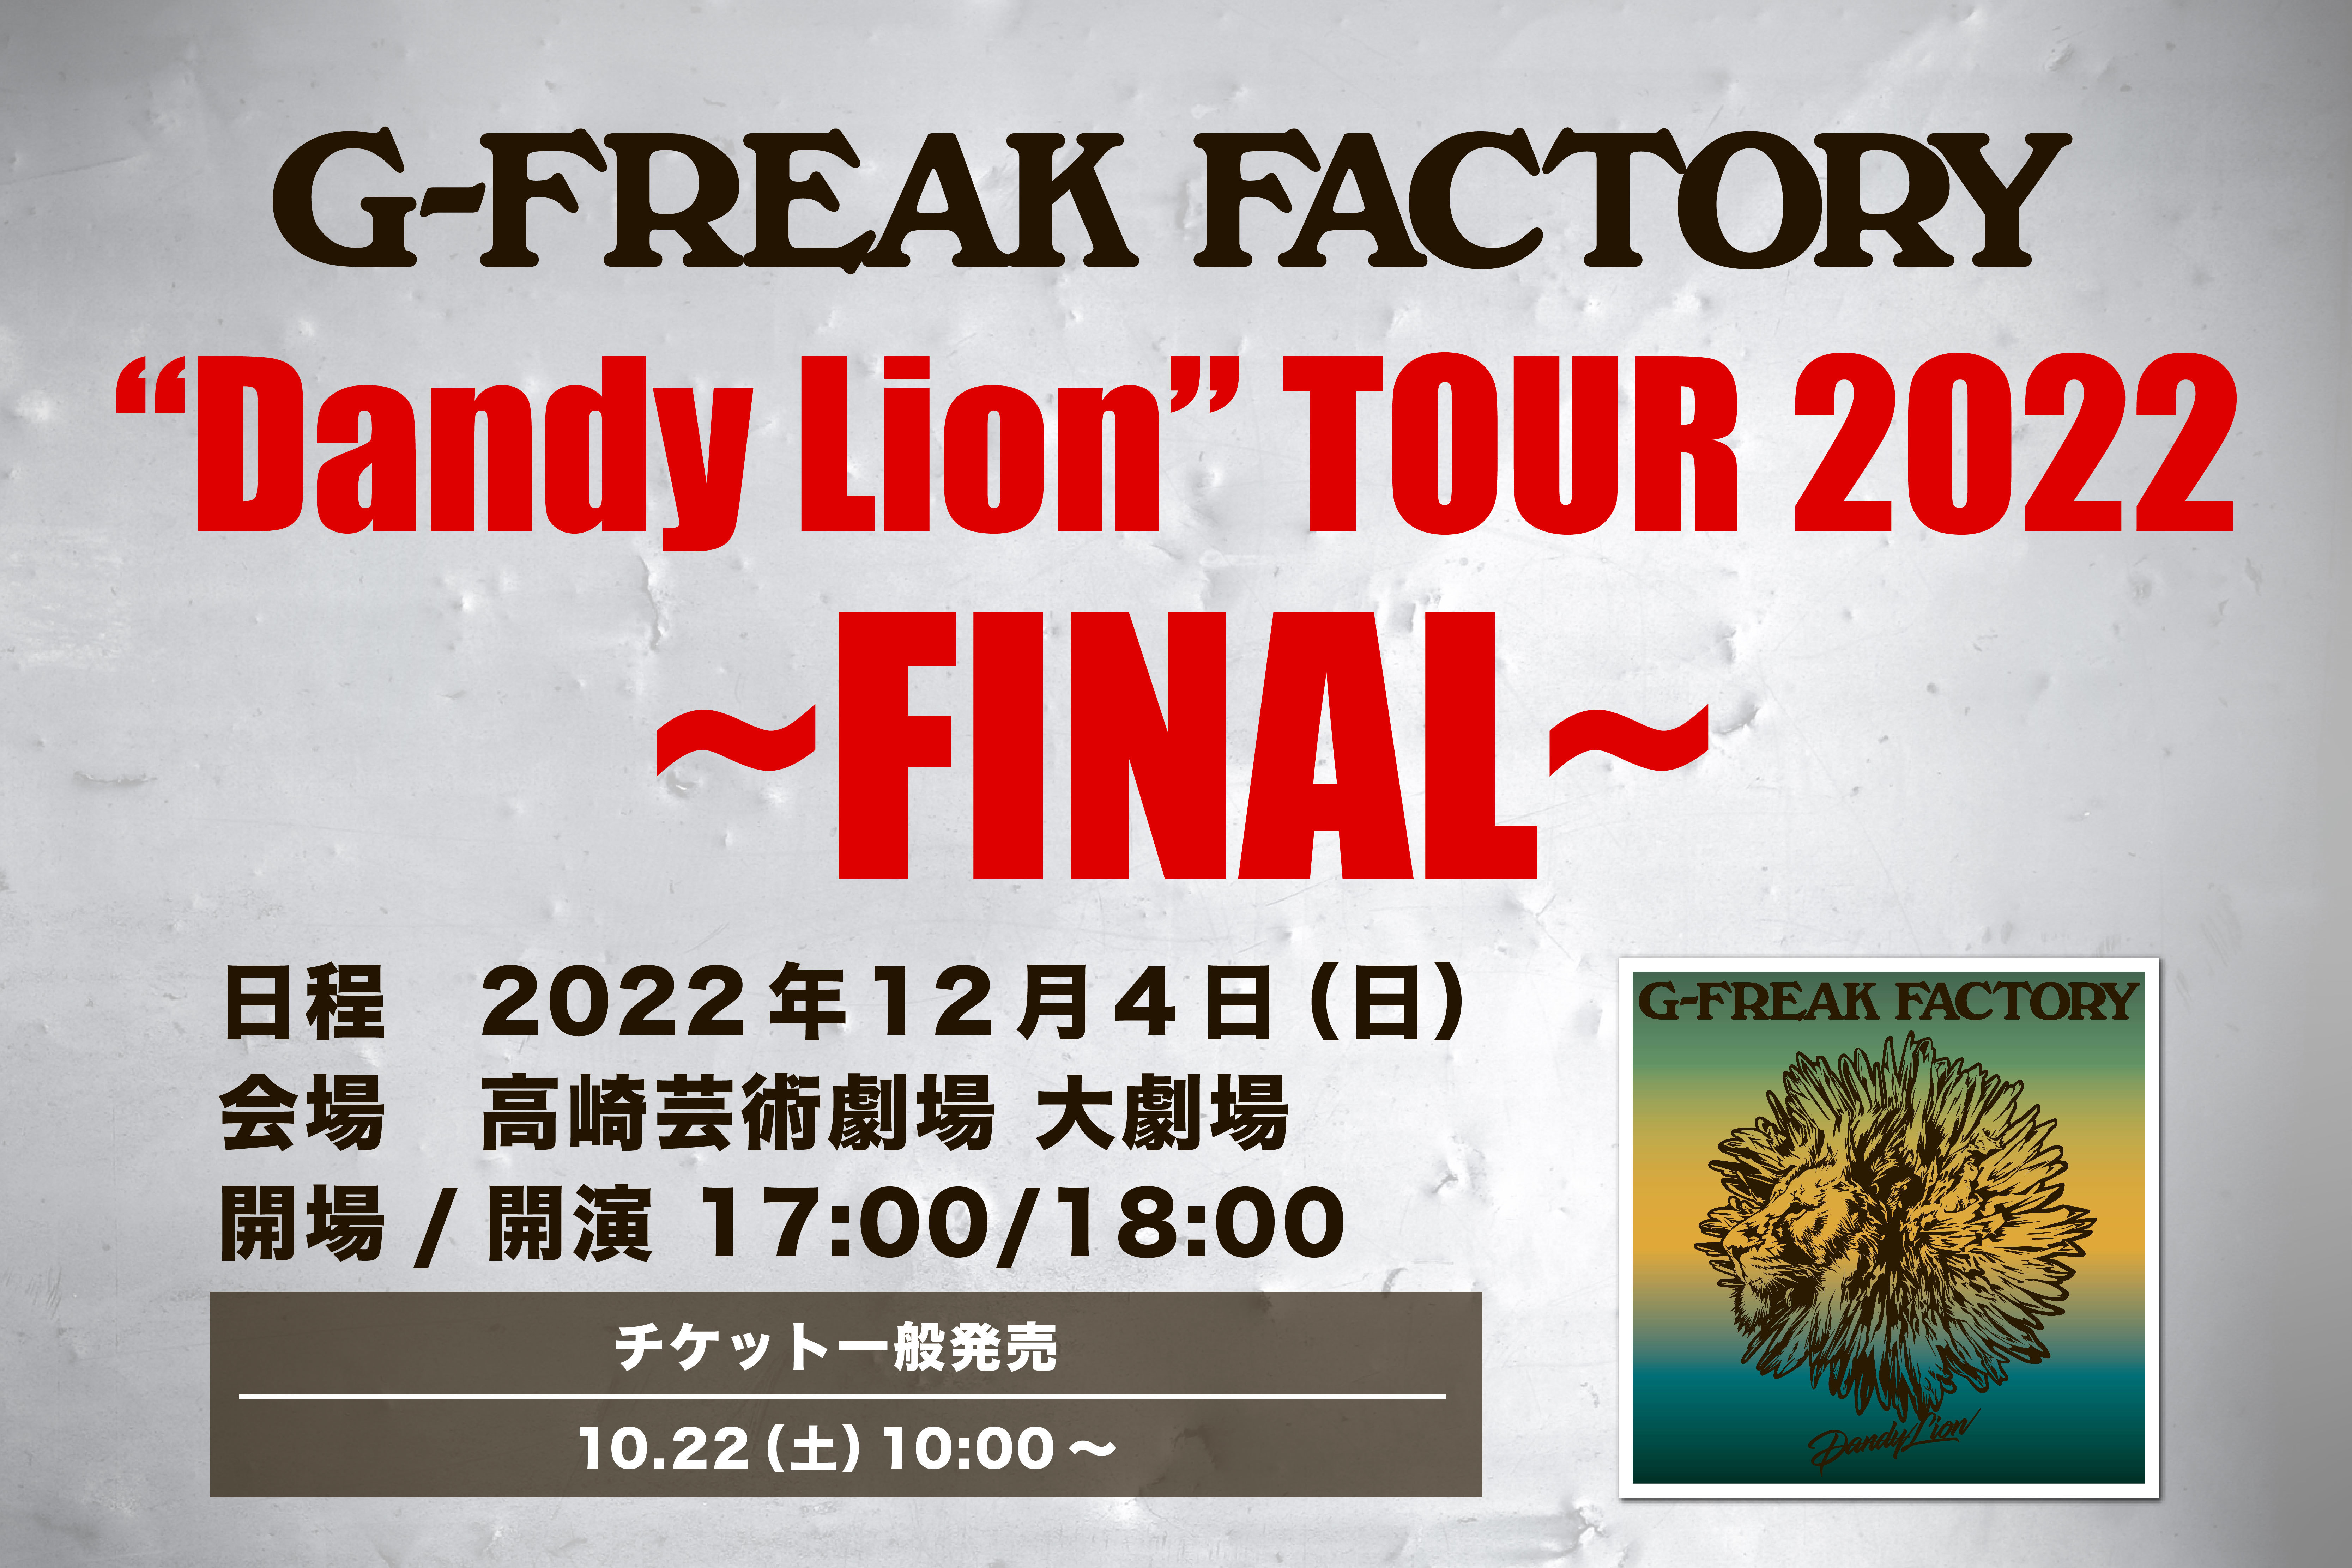 「G-FREAK FACTORY“Dandy Lion”TOUR 2022~FINAL~」10/22(土) 10:00〜チケット一般発売開始！